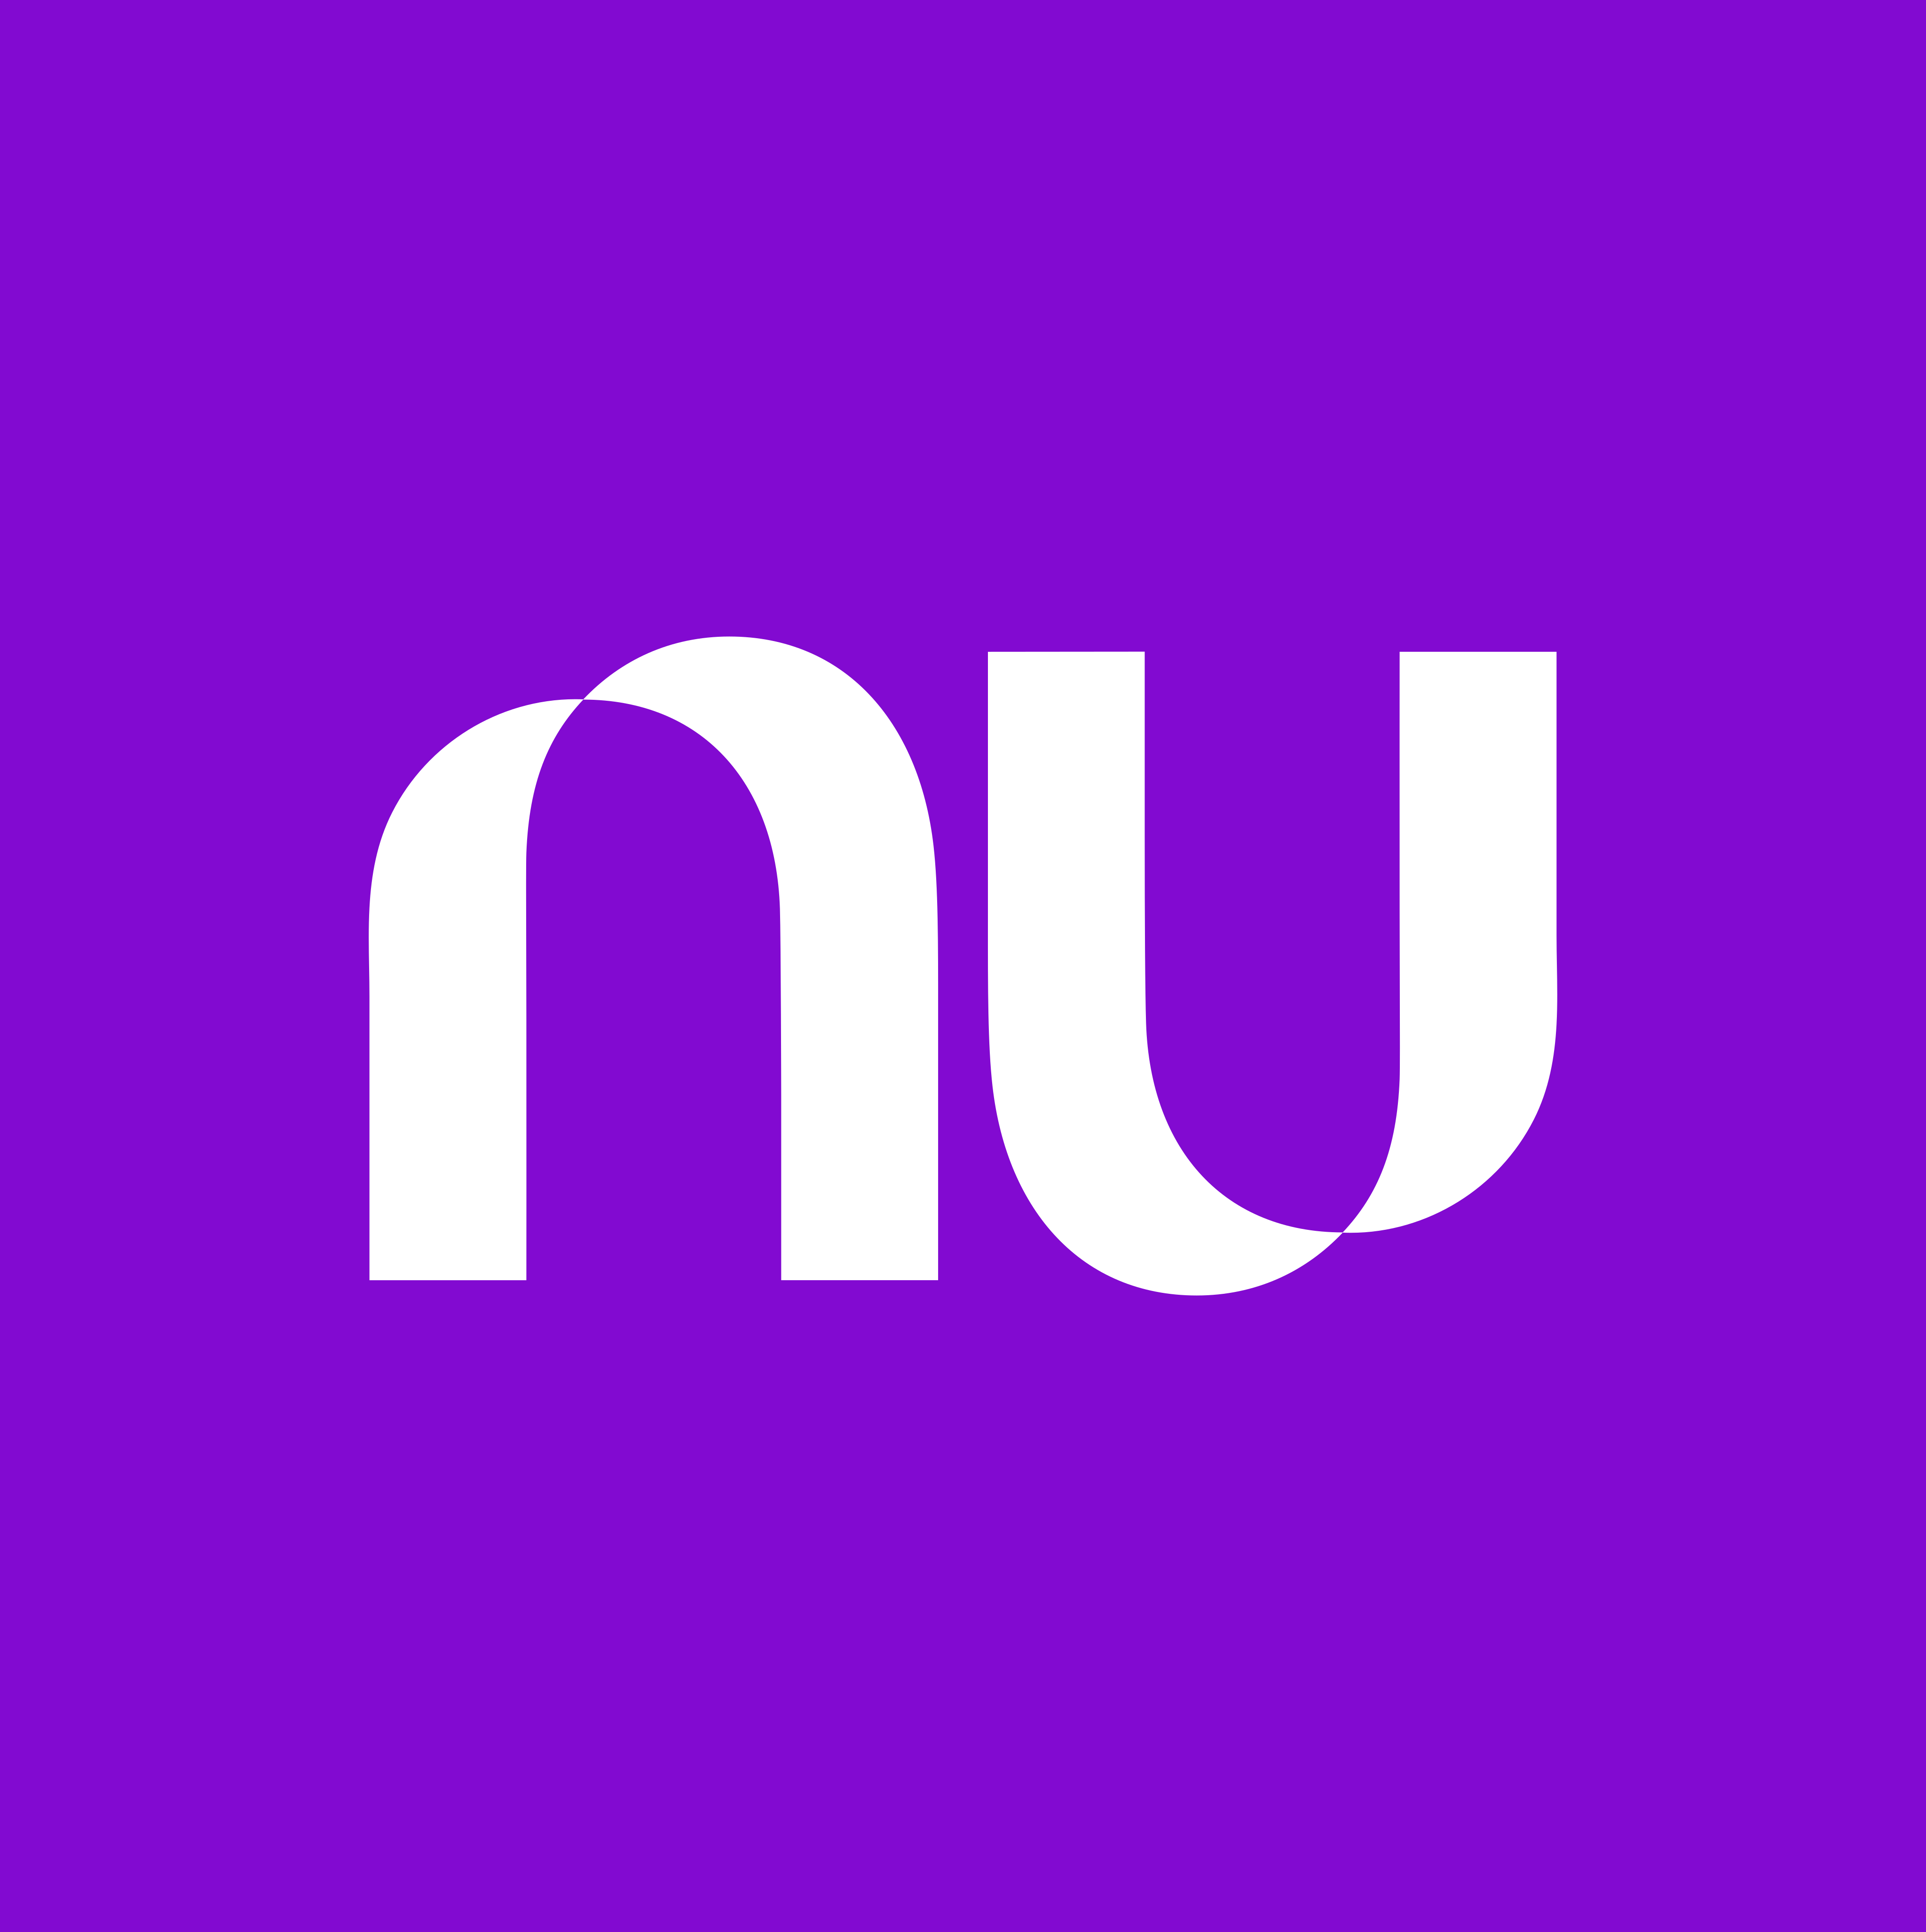 nubank logo 2 - Nubank Logo